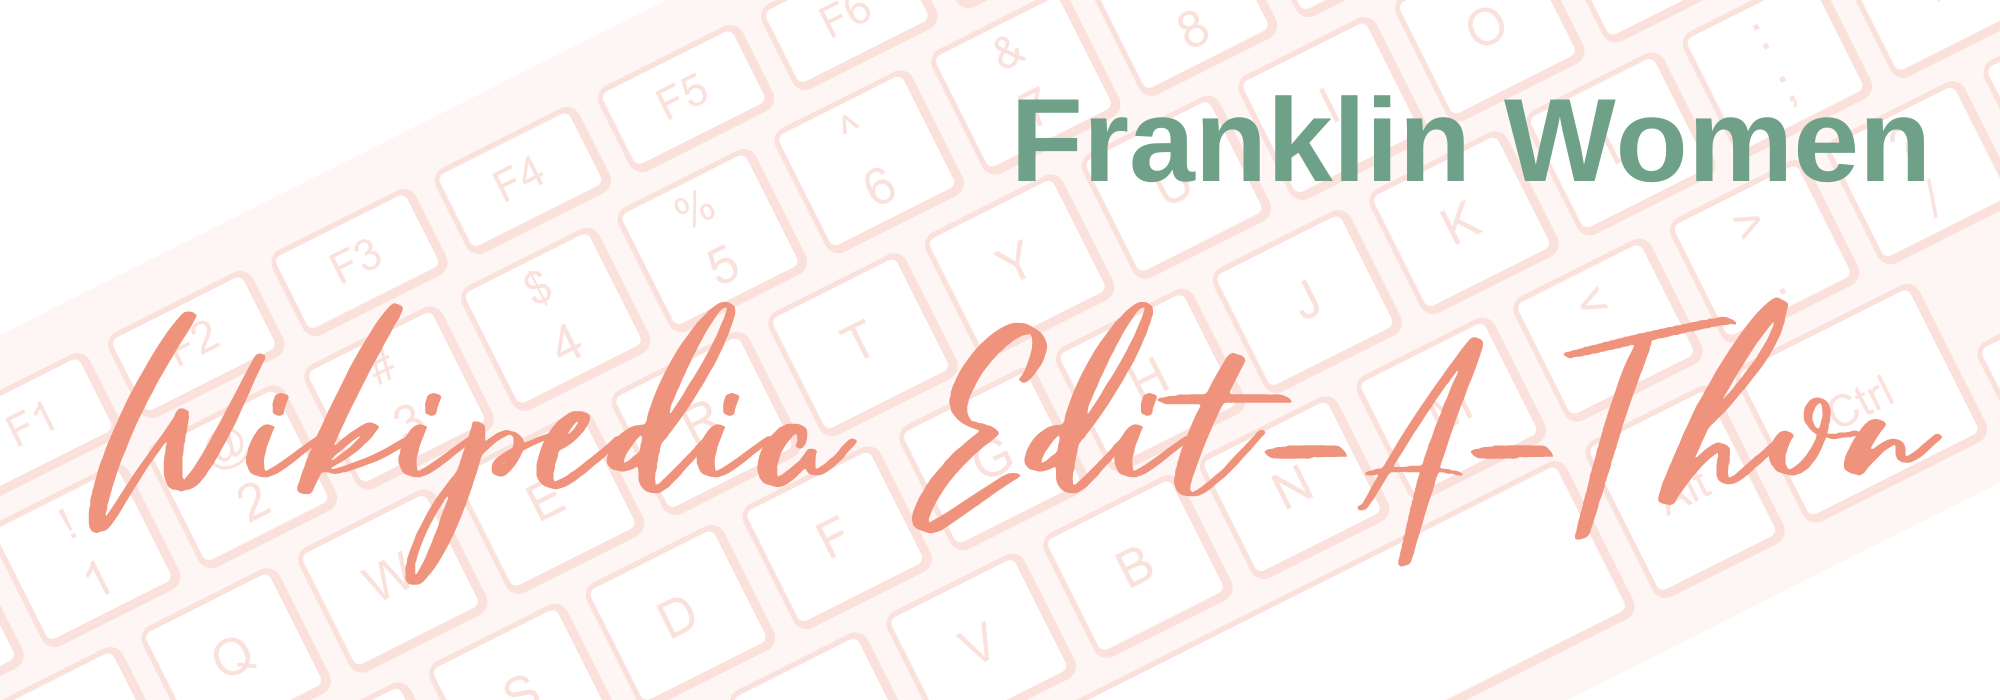 Franklin Women Wikipedia Edit-a-thon